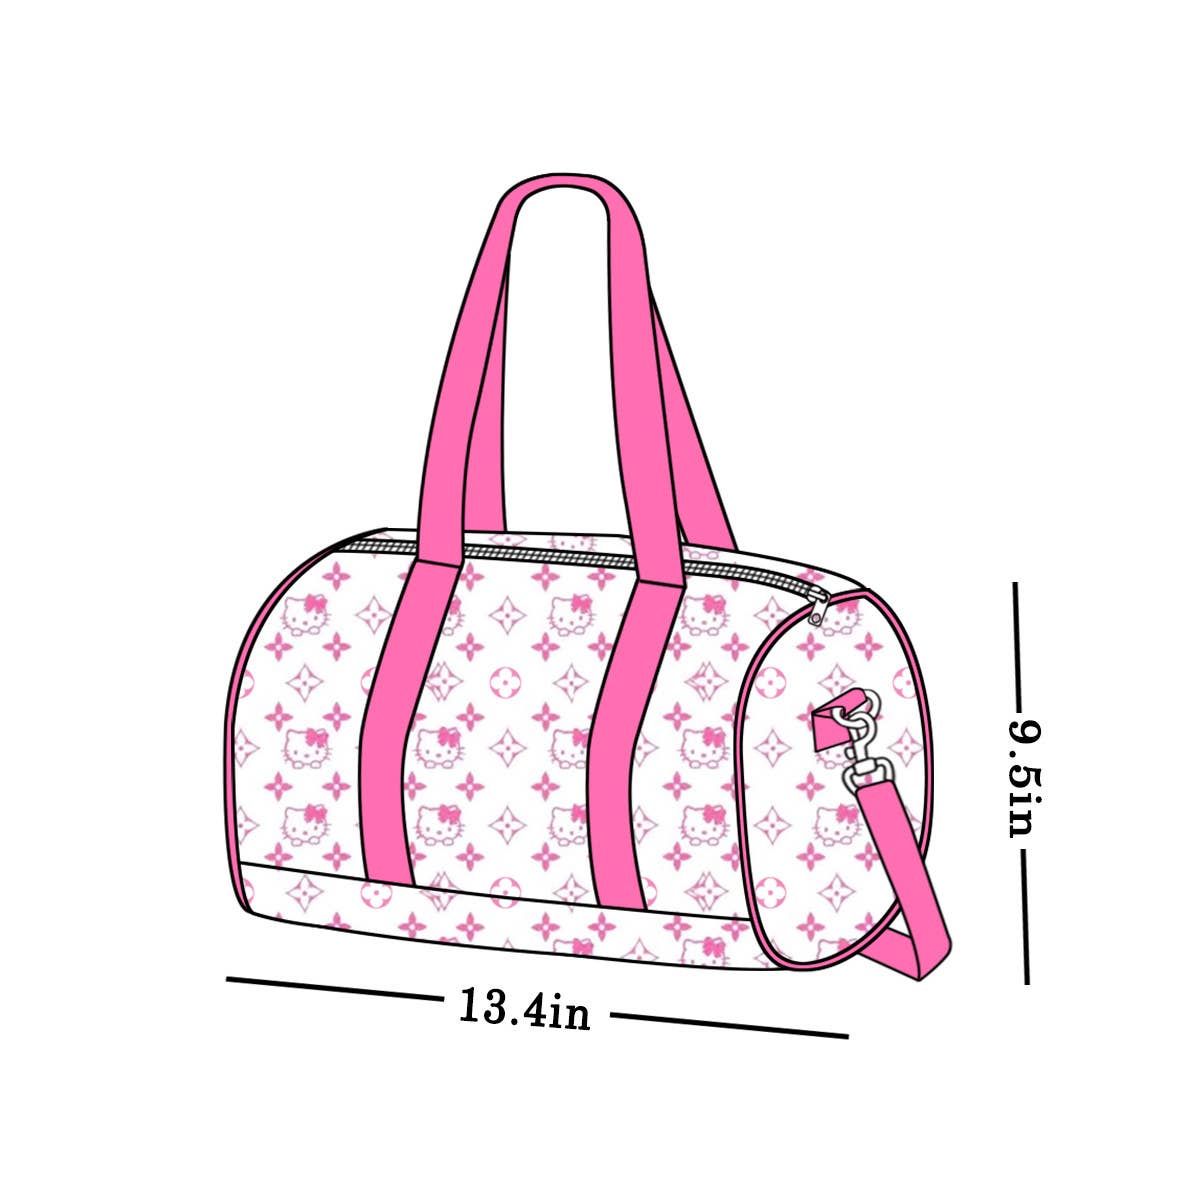 SMALL Hello Kitty DUFFLE BAG!!